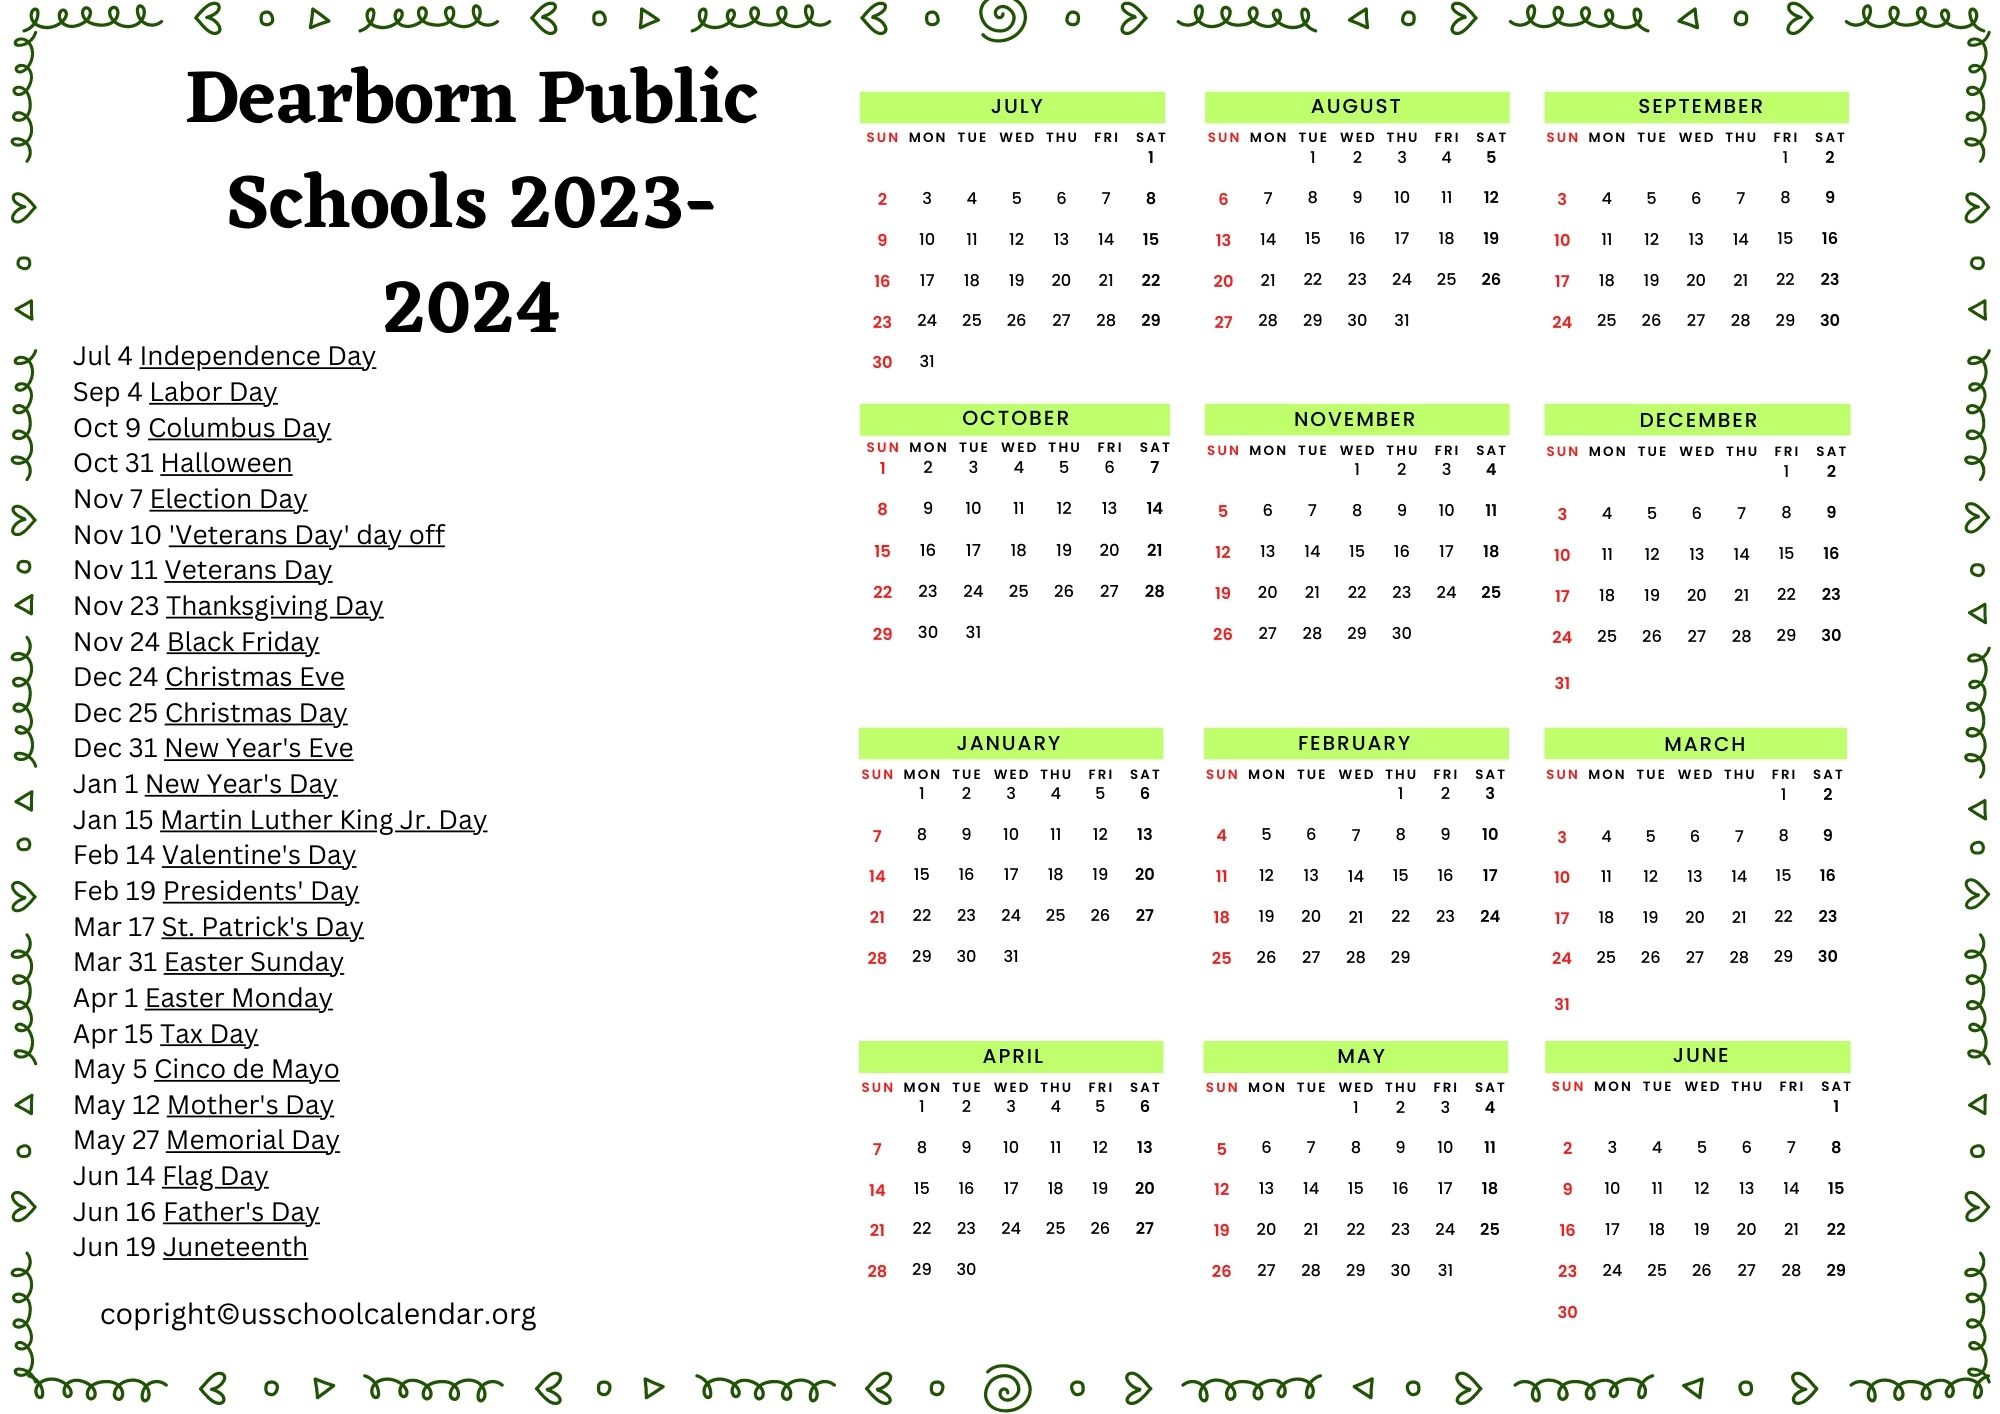 dearborn-public-schools-calendar-with-holidays-2023-2024